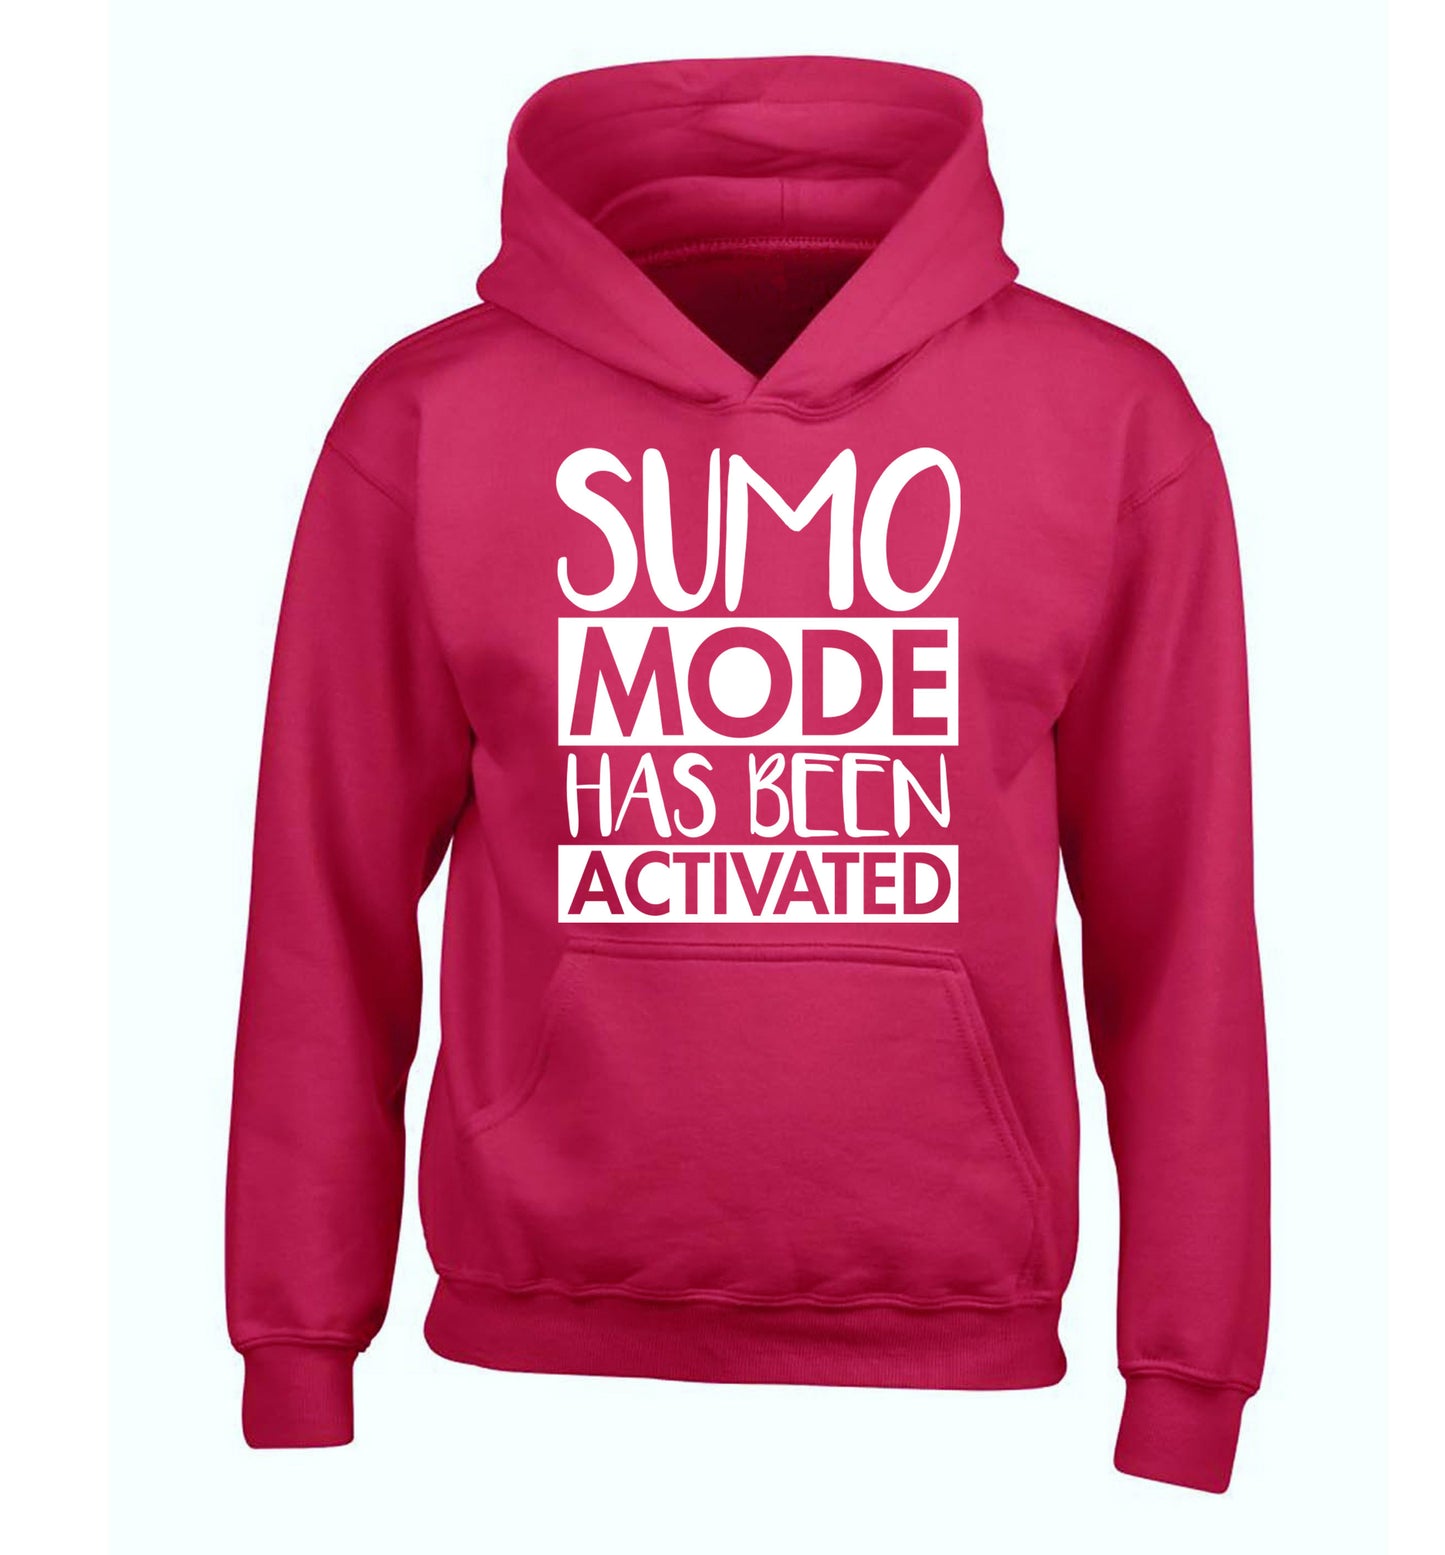 Sumo mode activated children's pink hoodie 12-14 Years